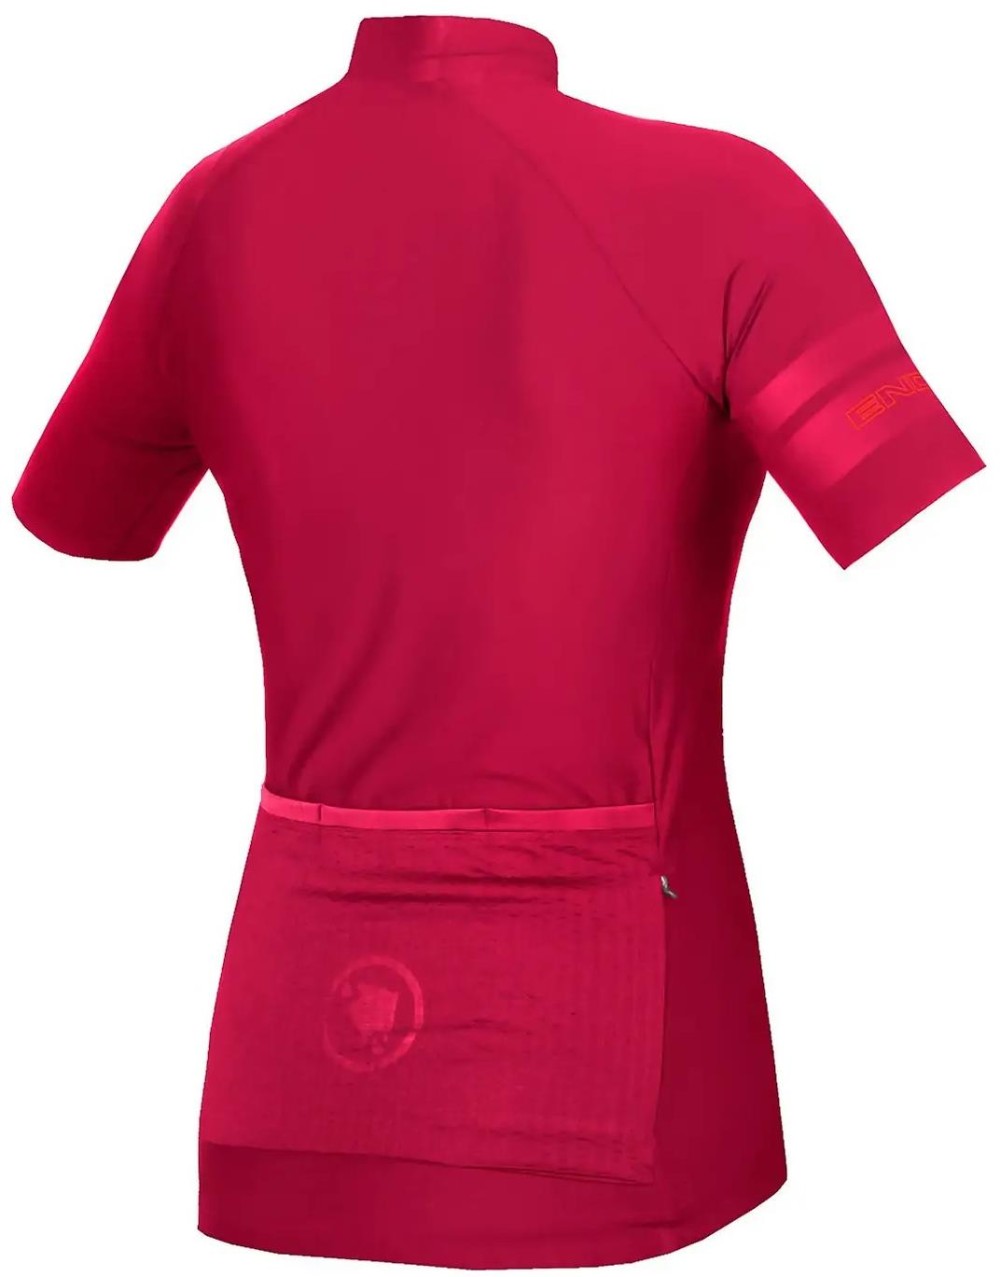 Pro SL Womens Short Sleeve Cycling Jersey II image 1